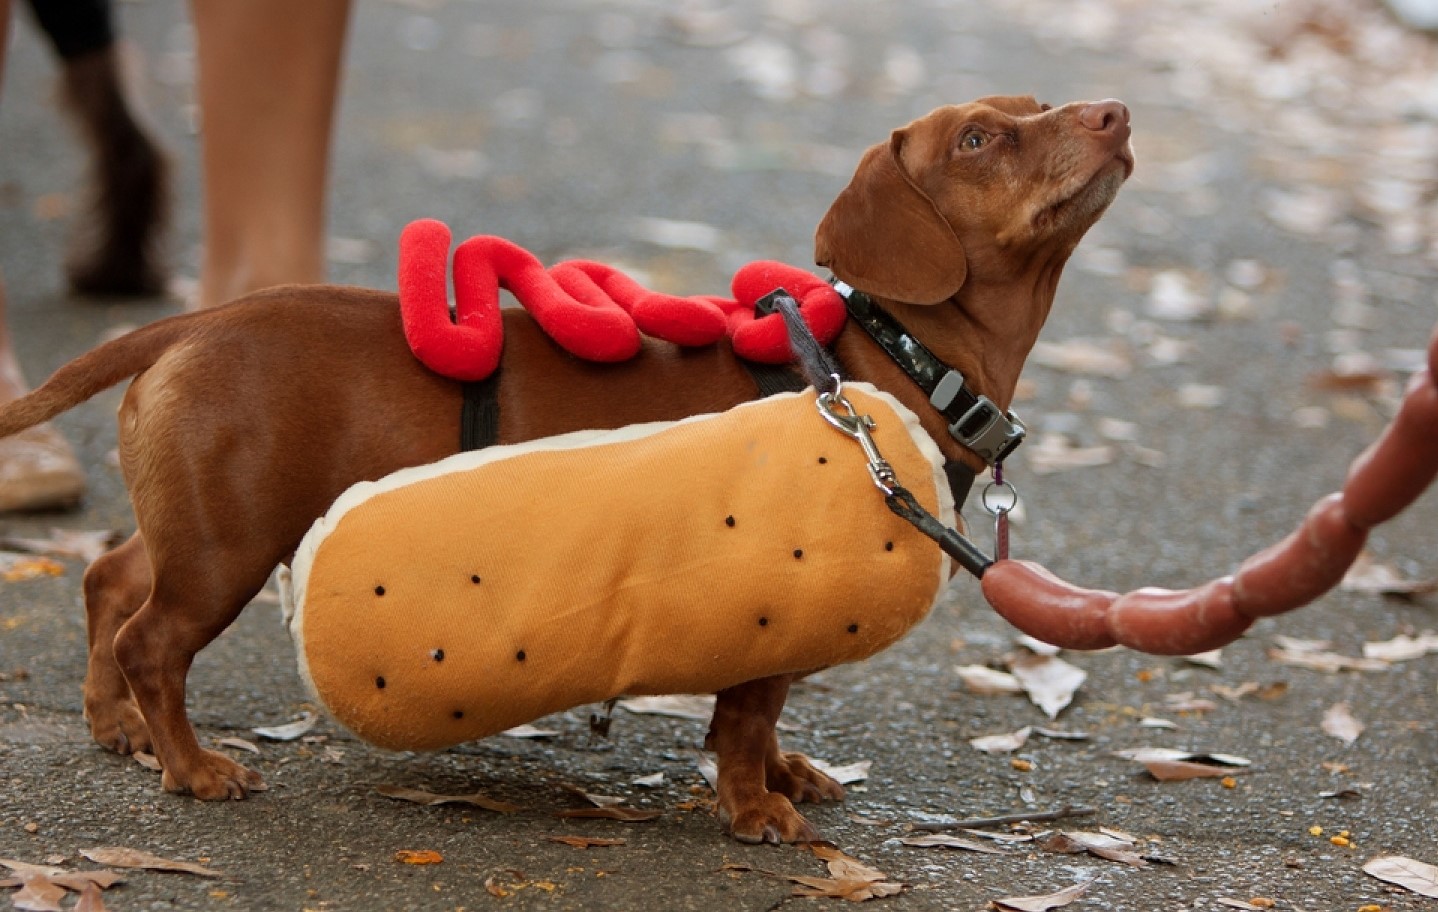 dachshund dog in a hot dog costume